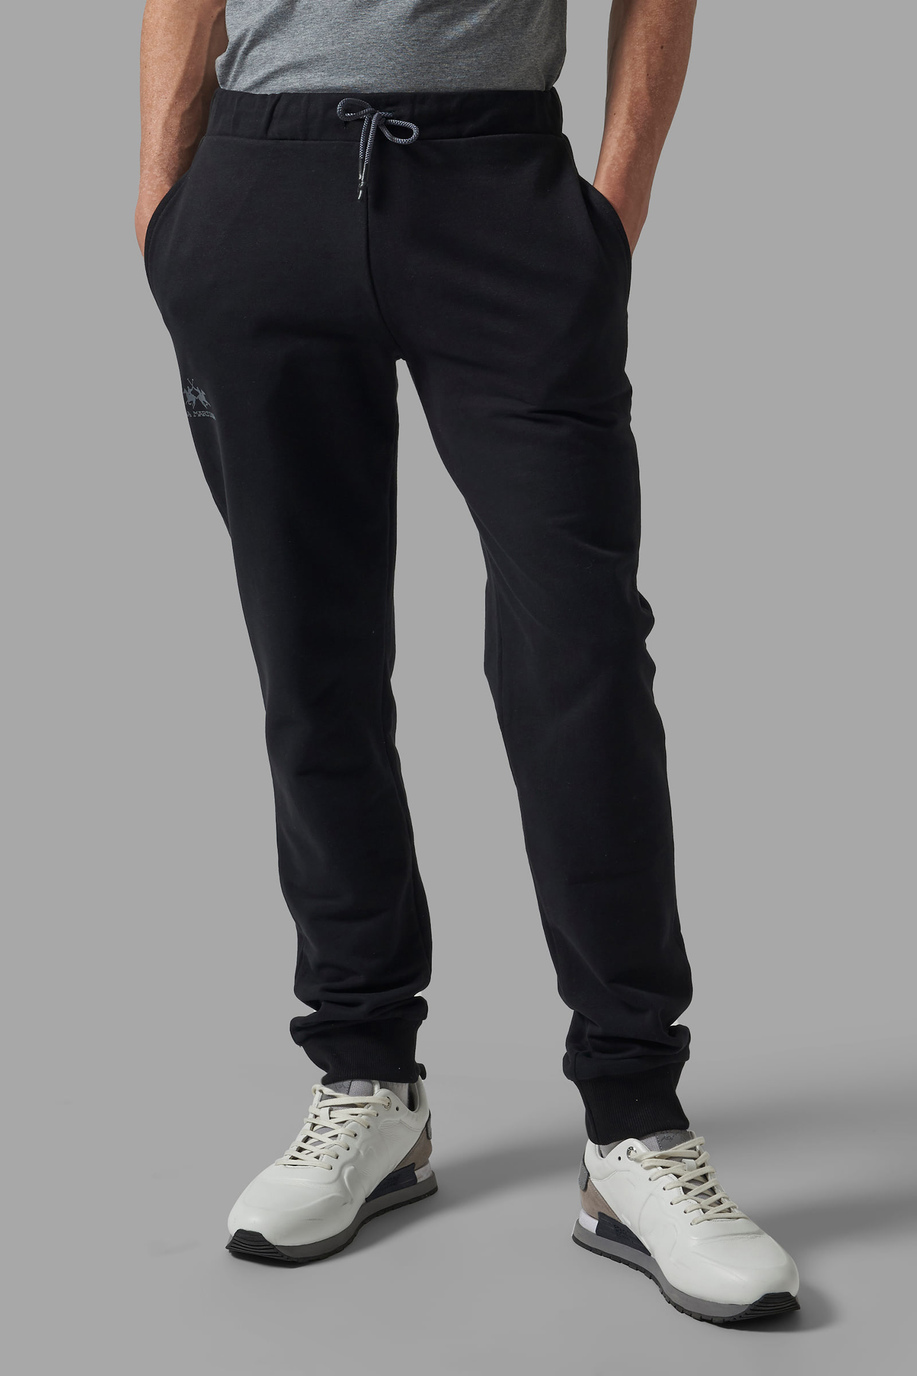 Pantalone da uomo regular fit - BP + BR + CC (all seasons - never on sale) | La Martina - Official Online Shop